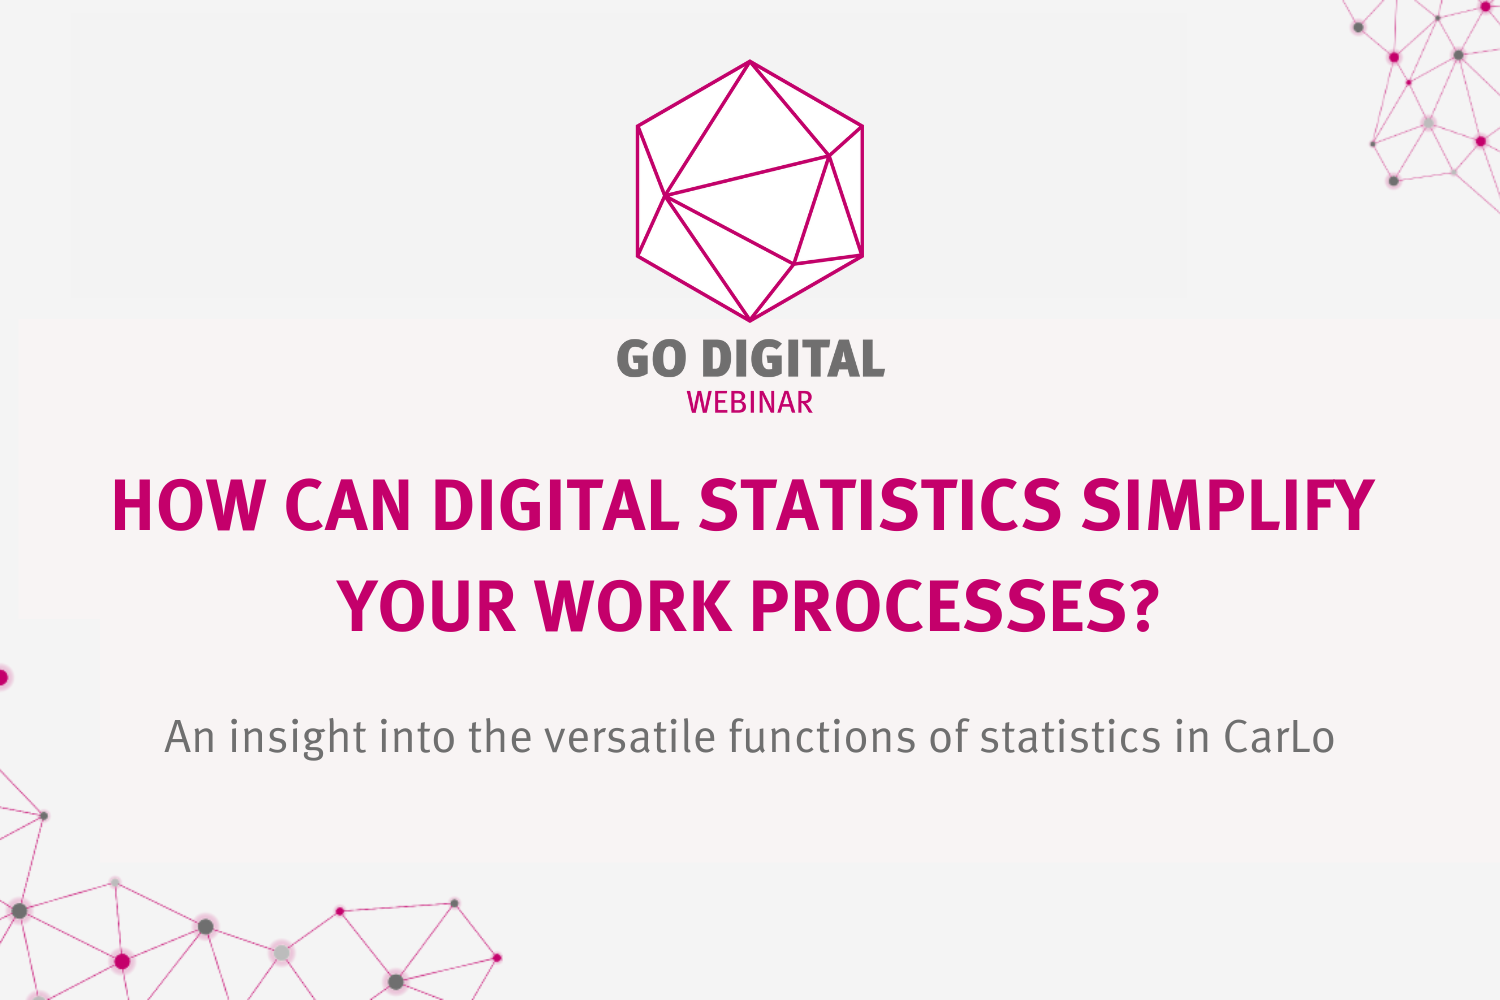 GO DIGITAL: How can digital statistics simplify your work processes?